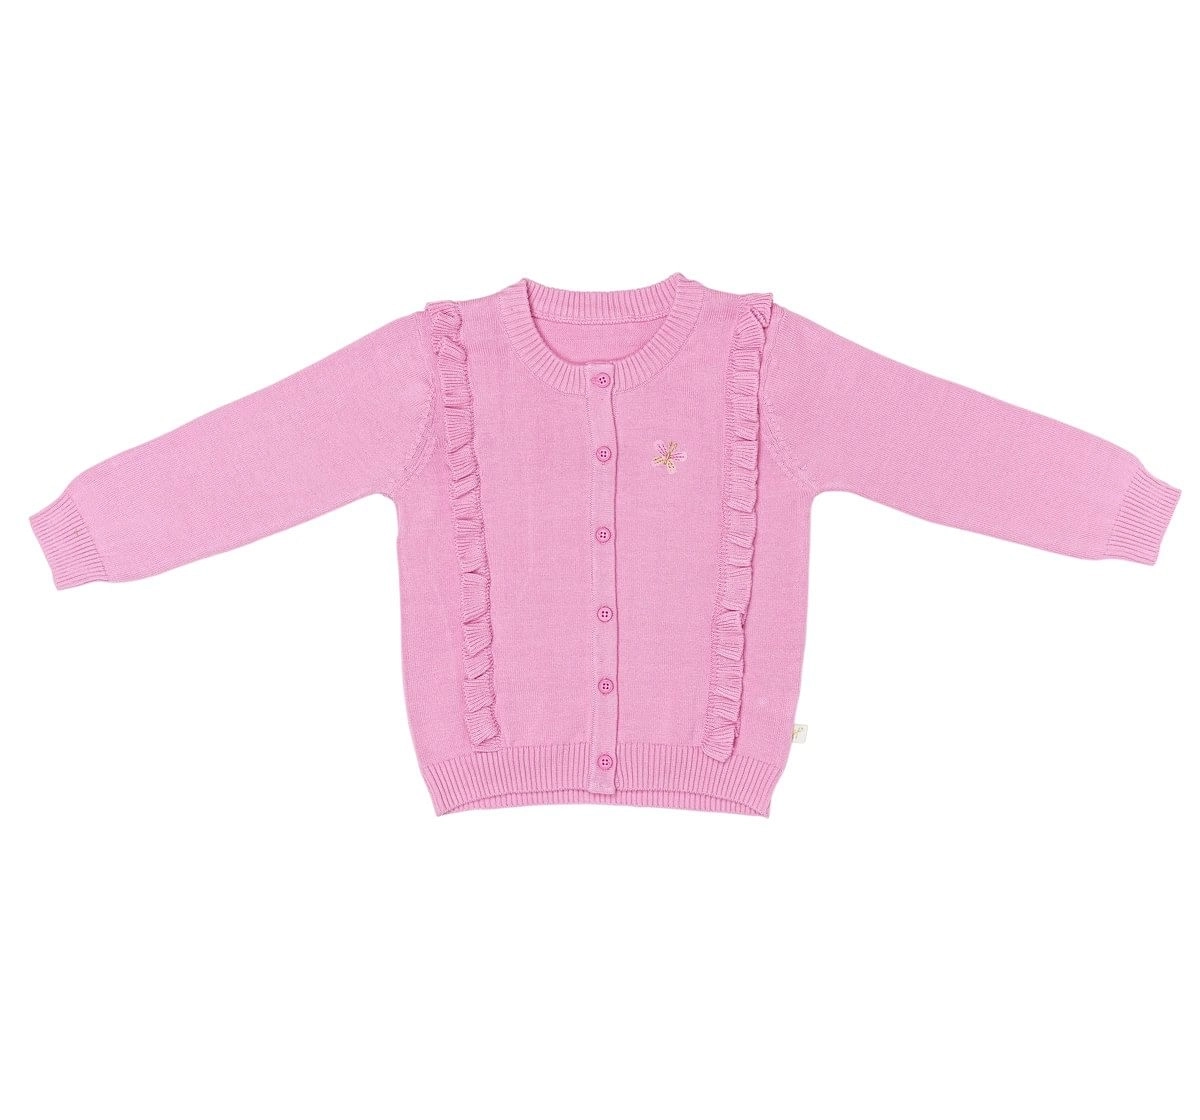 Girls Full Sleeve Sweater Frill Design-Pink